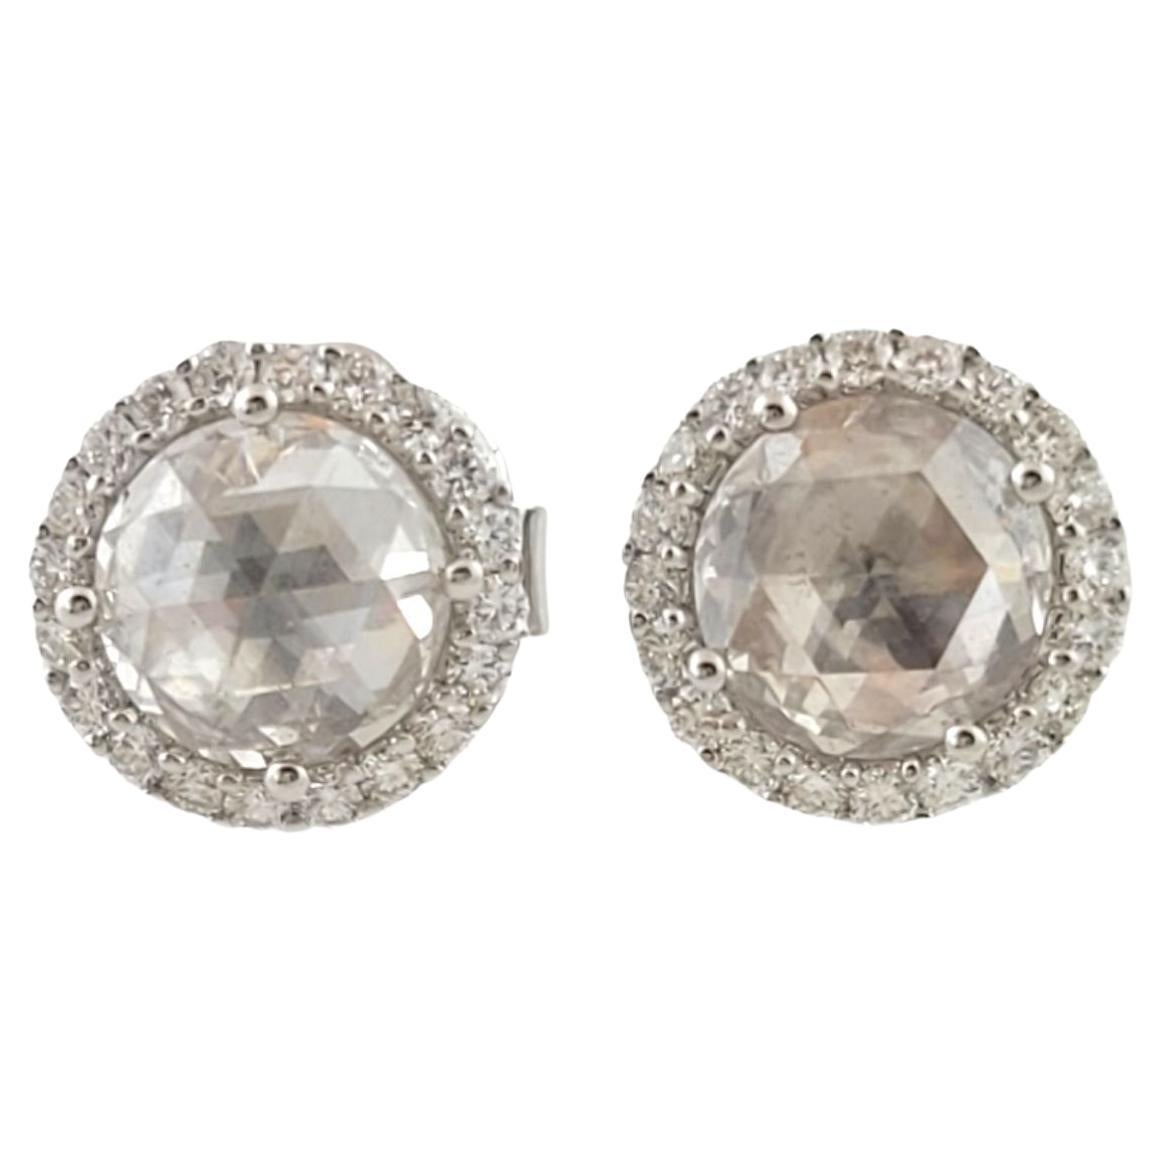 Paul Morelli 18K White Gold Rose Cut Diamond Halo Stud Earrings